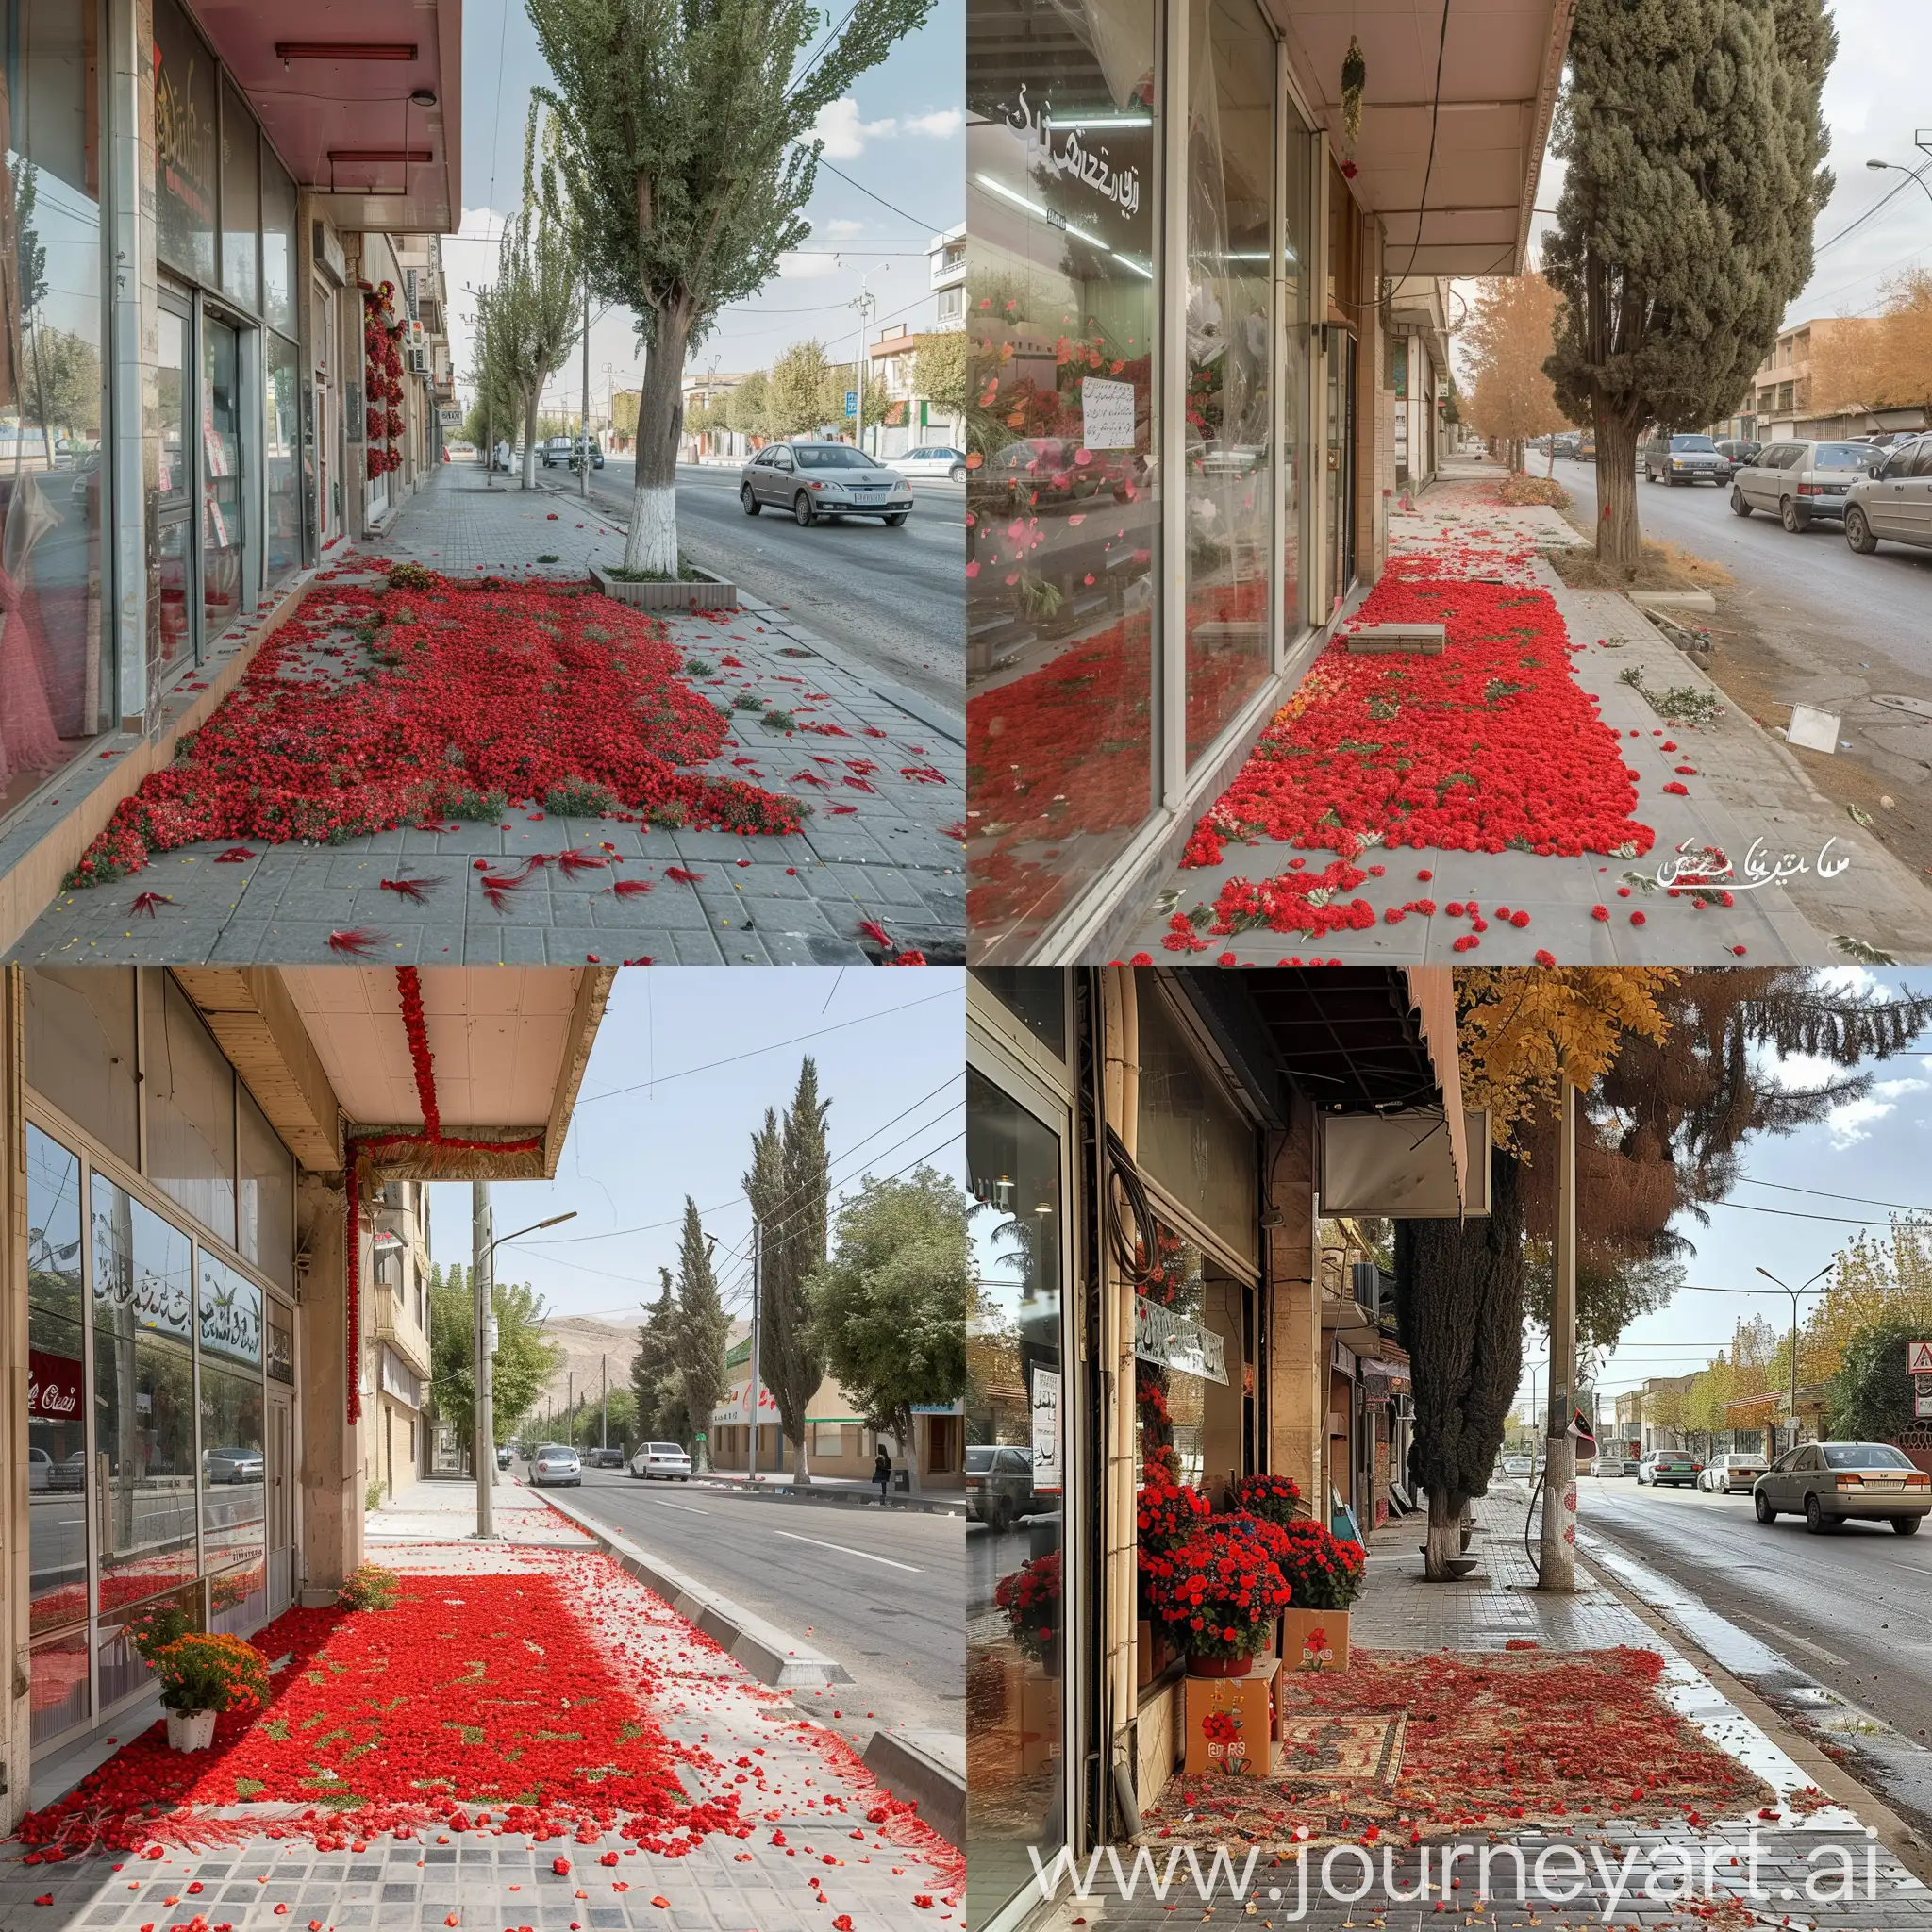 Vibrant-Flower-Shop-on-Faculty-Street-Urmia-Iran